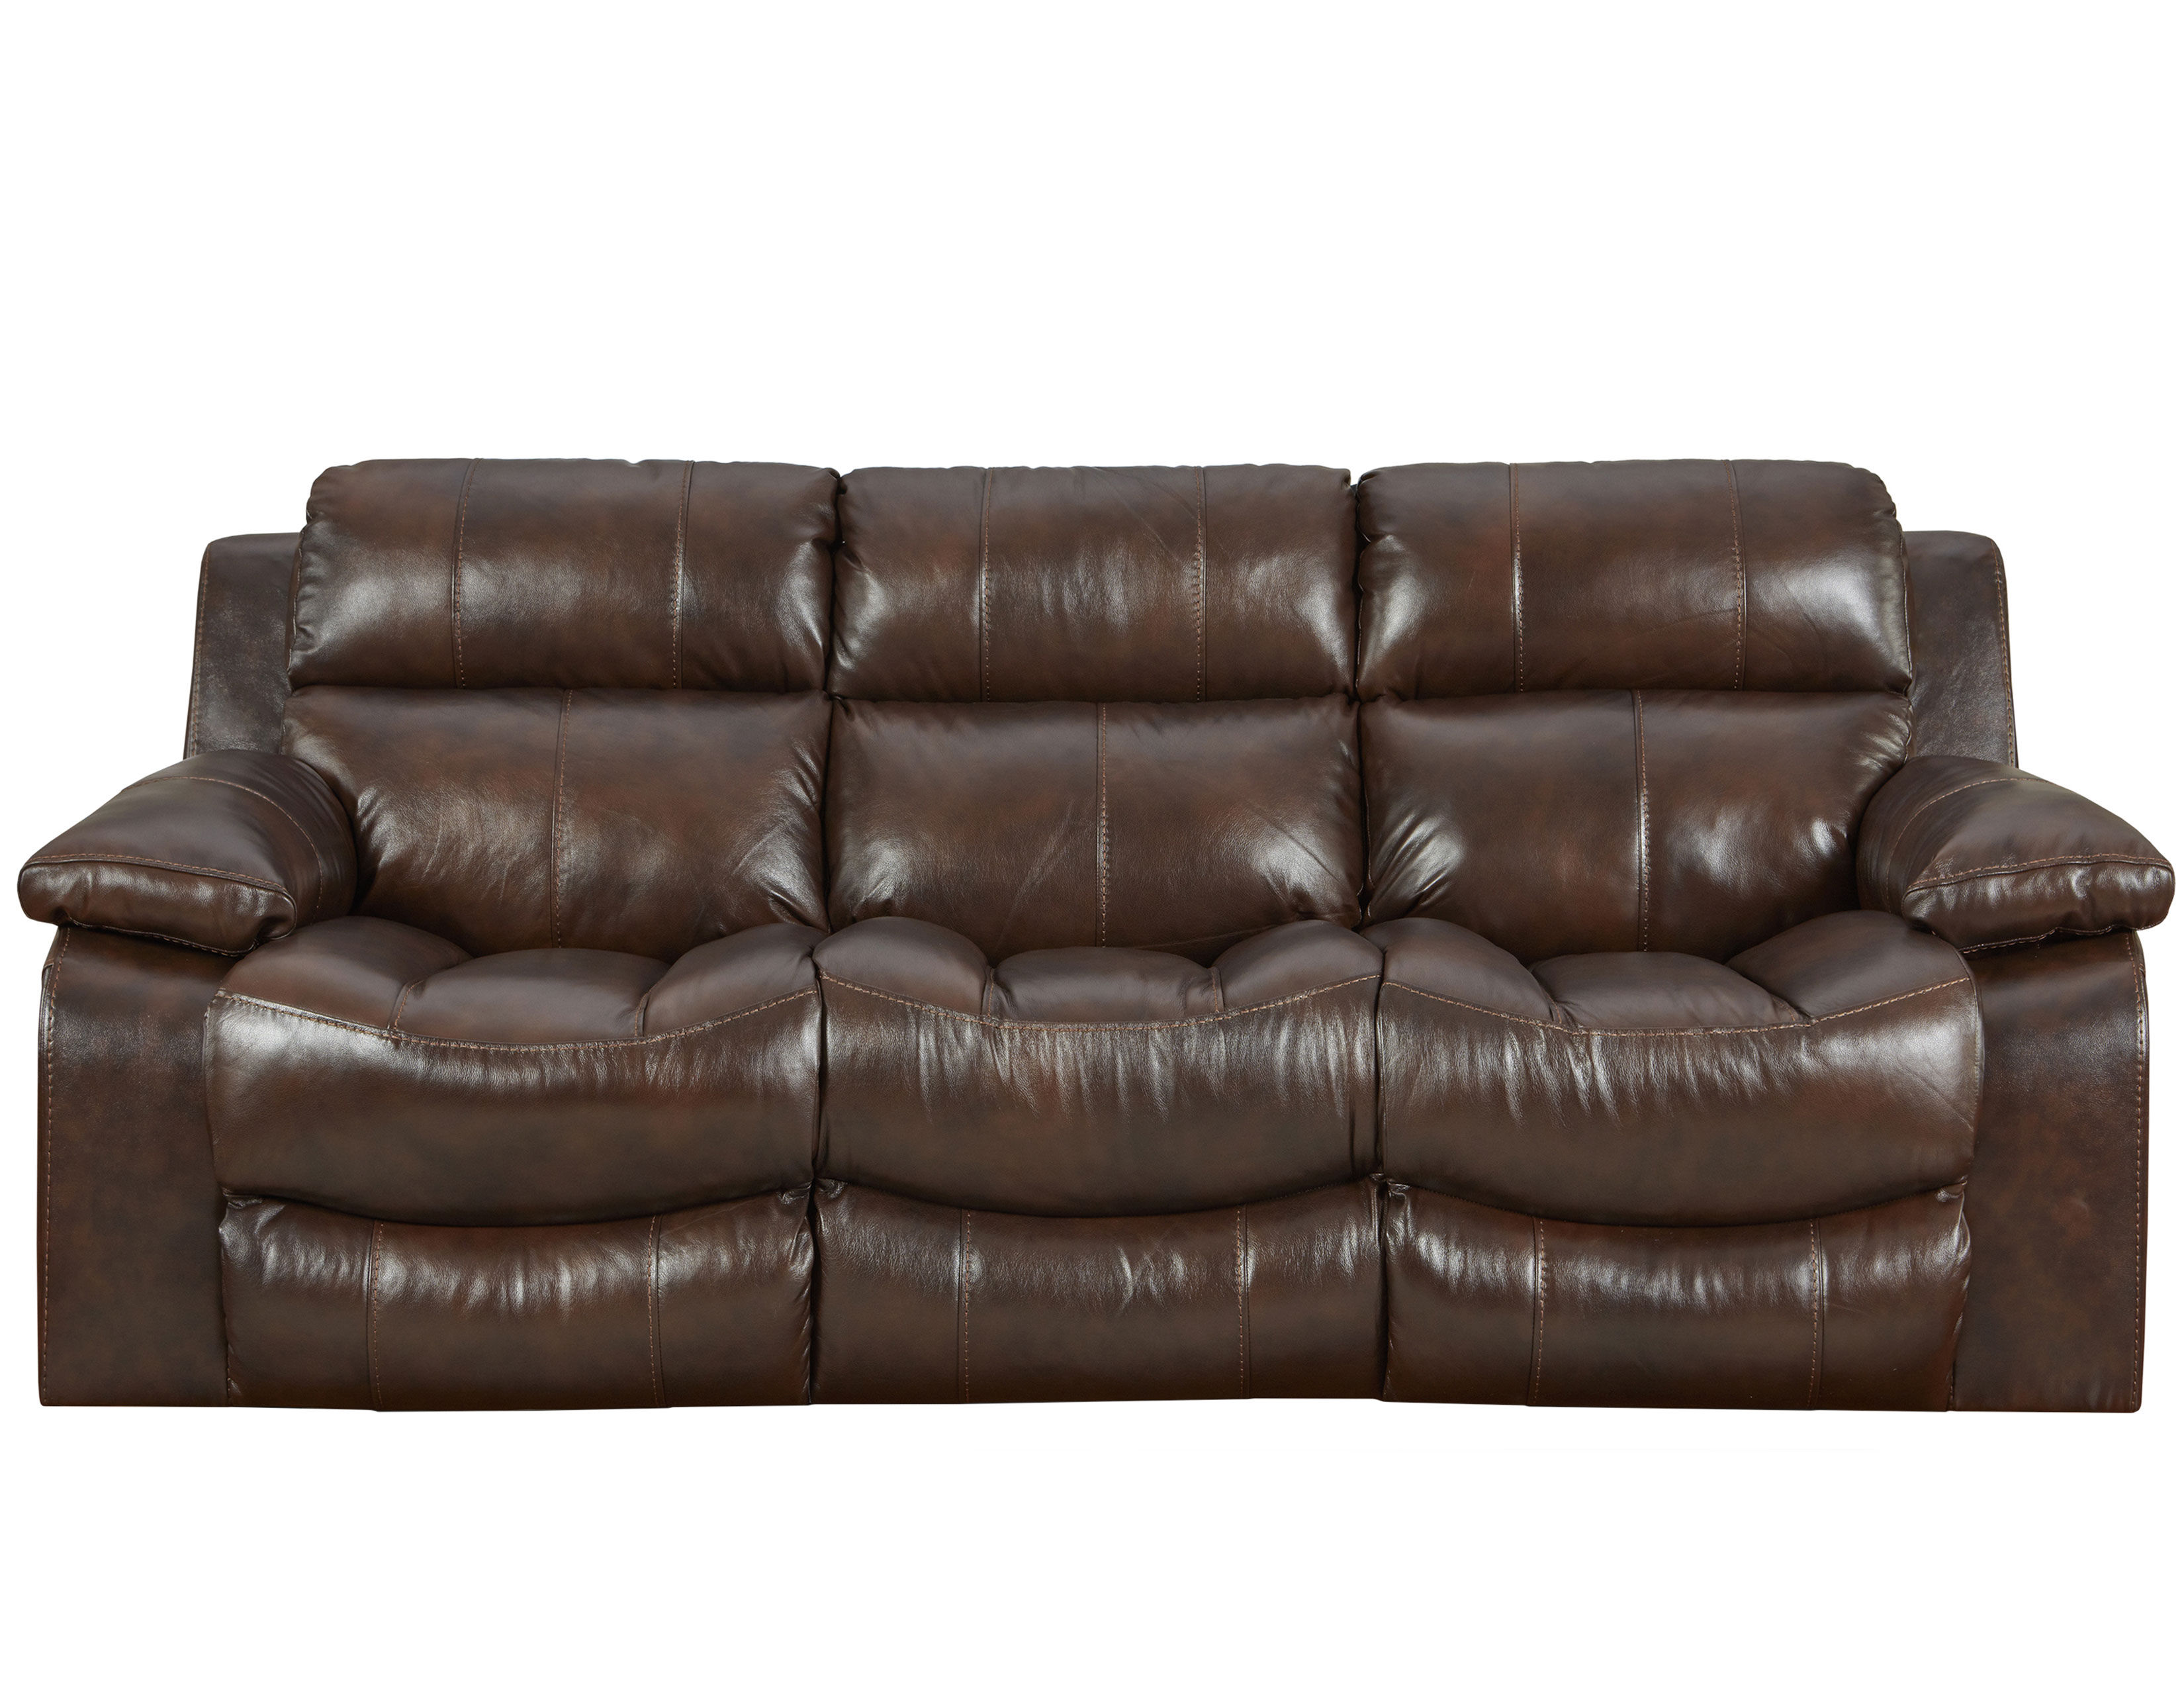 Positano Leather Reclining Sofa 90, Leather Reclining Sofas